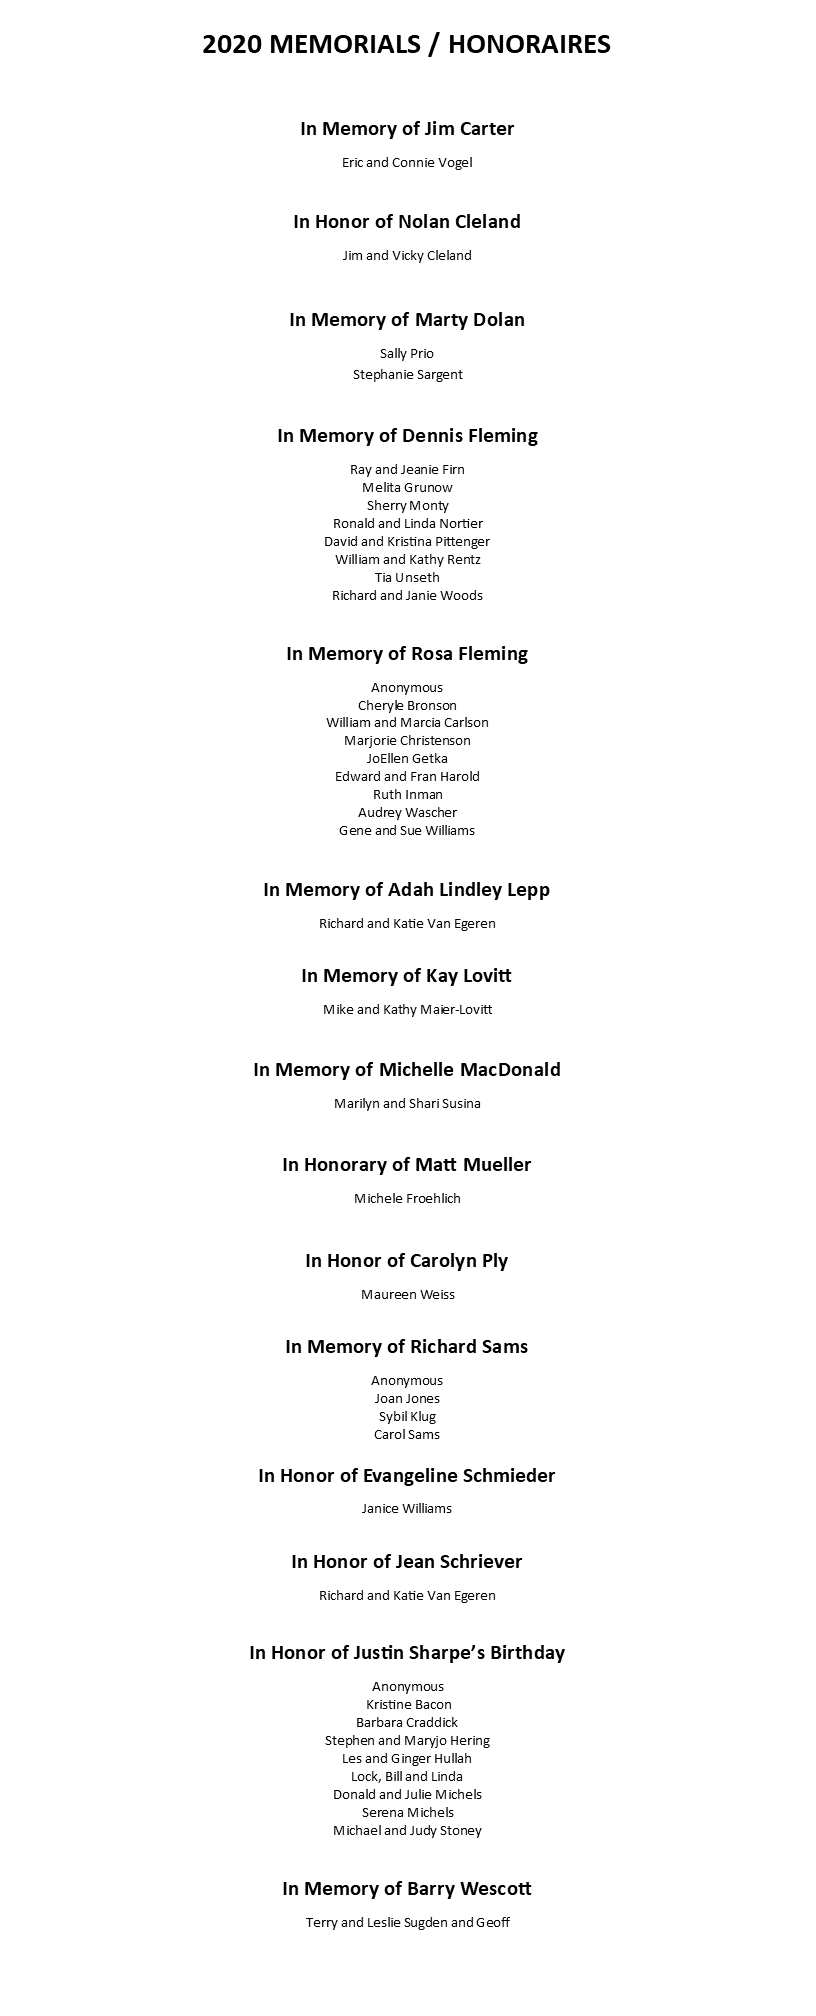 2020 Memorials and Honorary